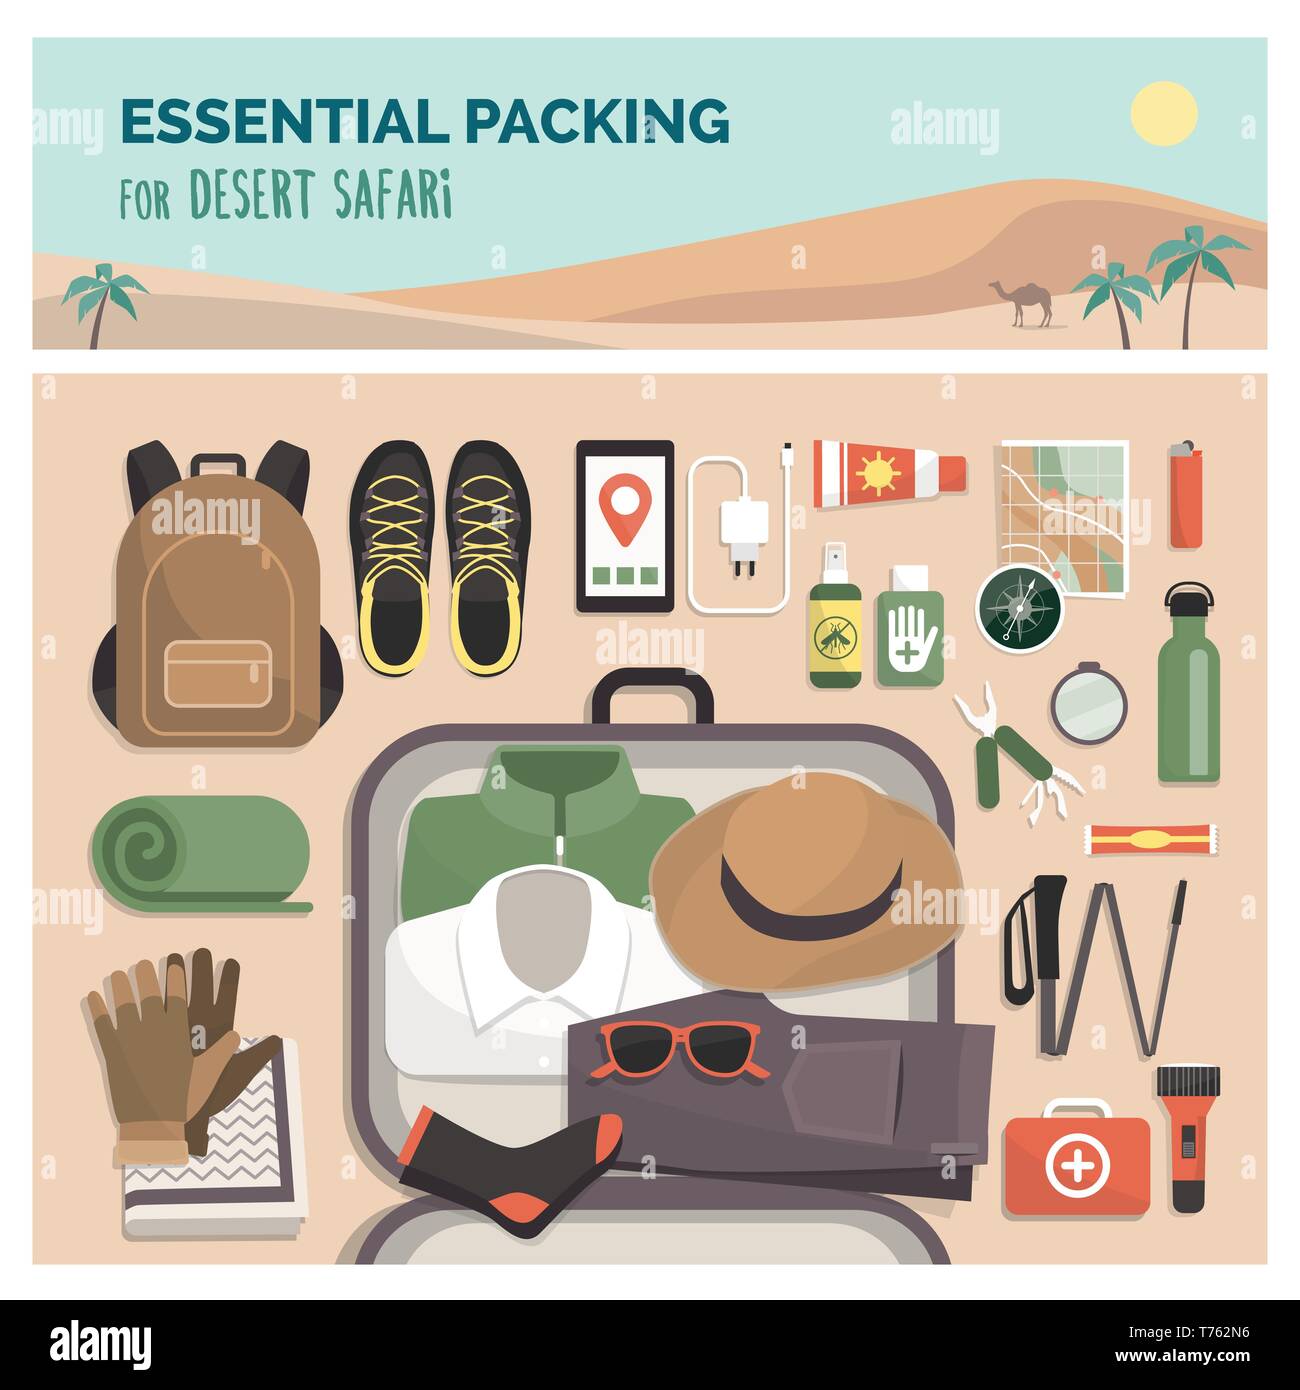 Essential packing for desert safari tour, adventure travel and